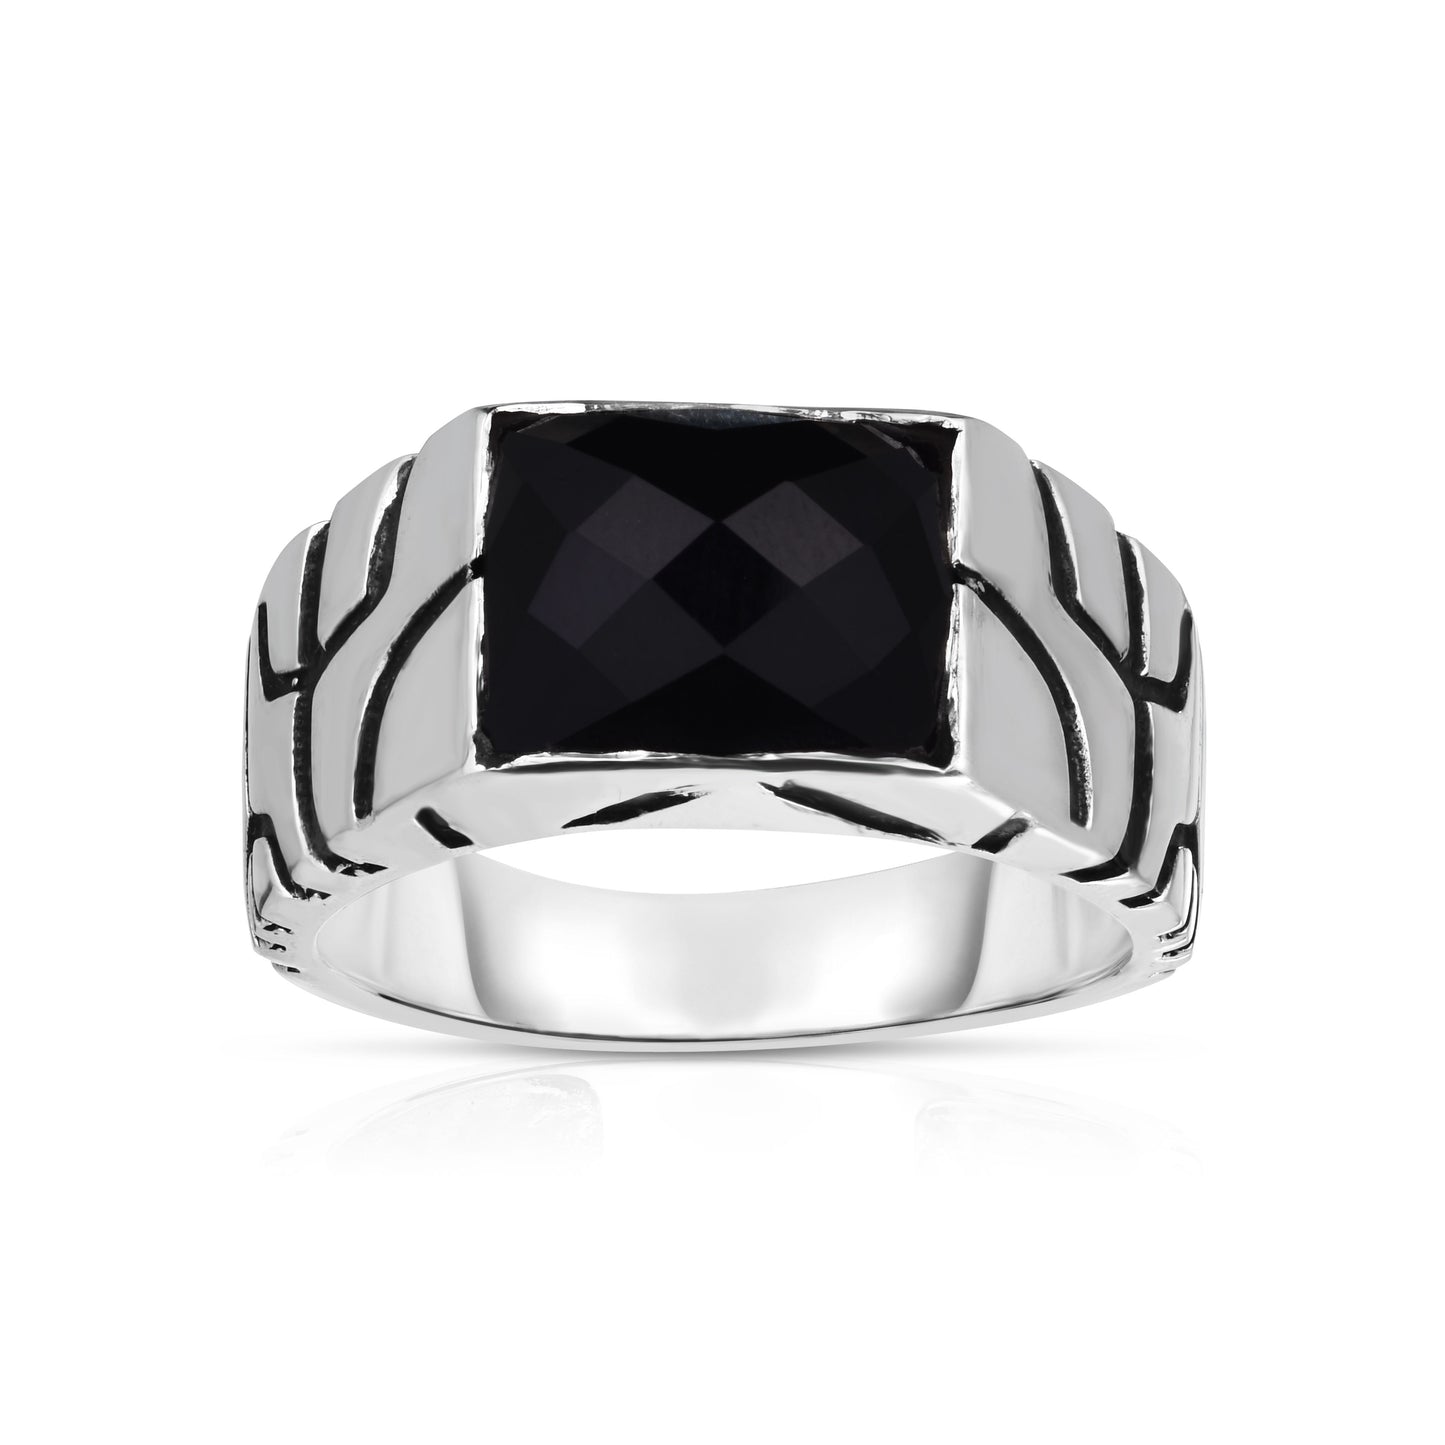 Phillip Gavriel Silver Black Onyx Nugget Ring